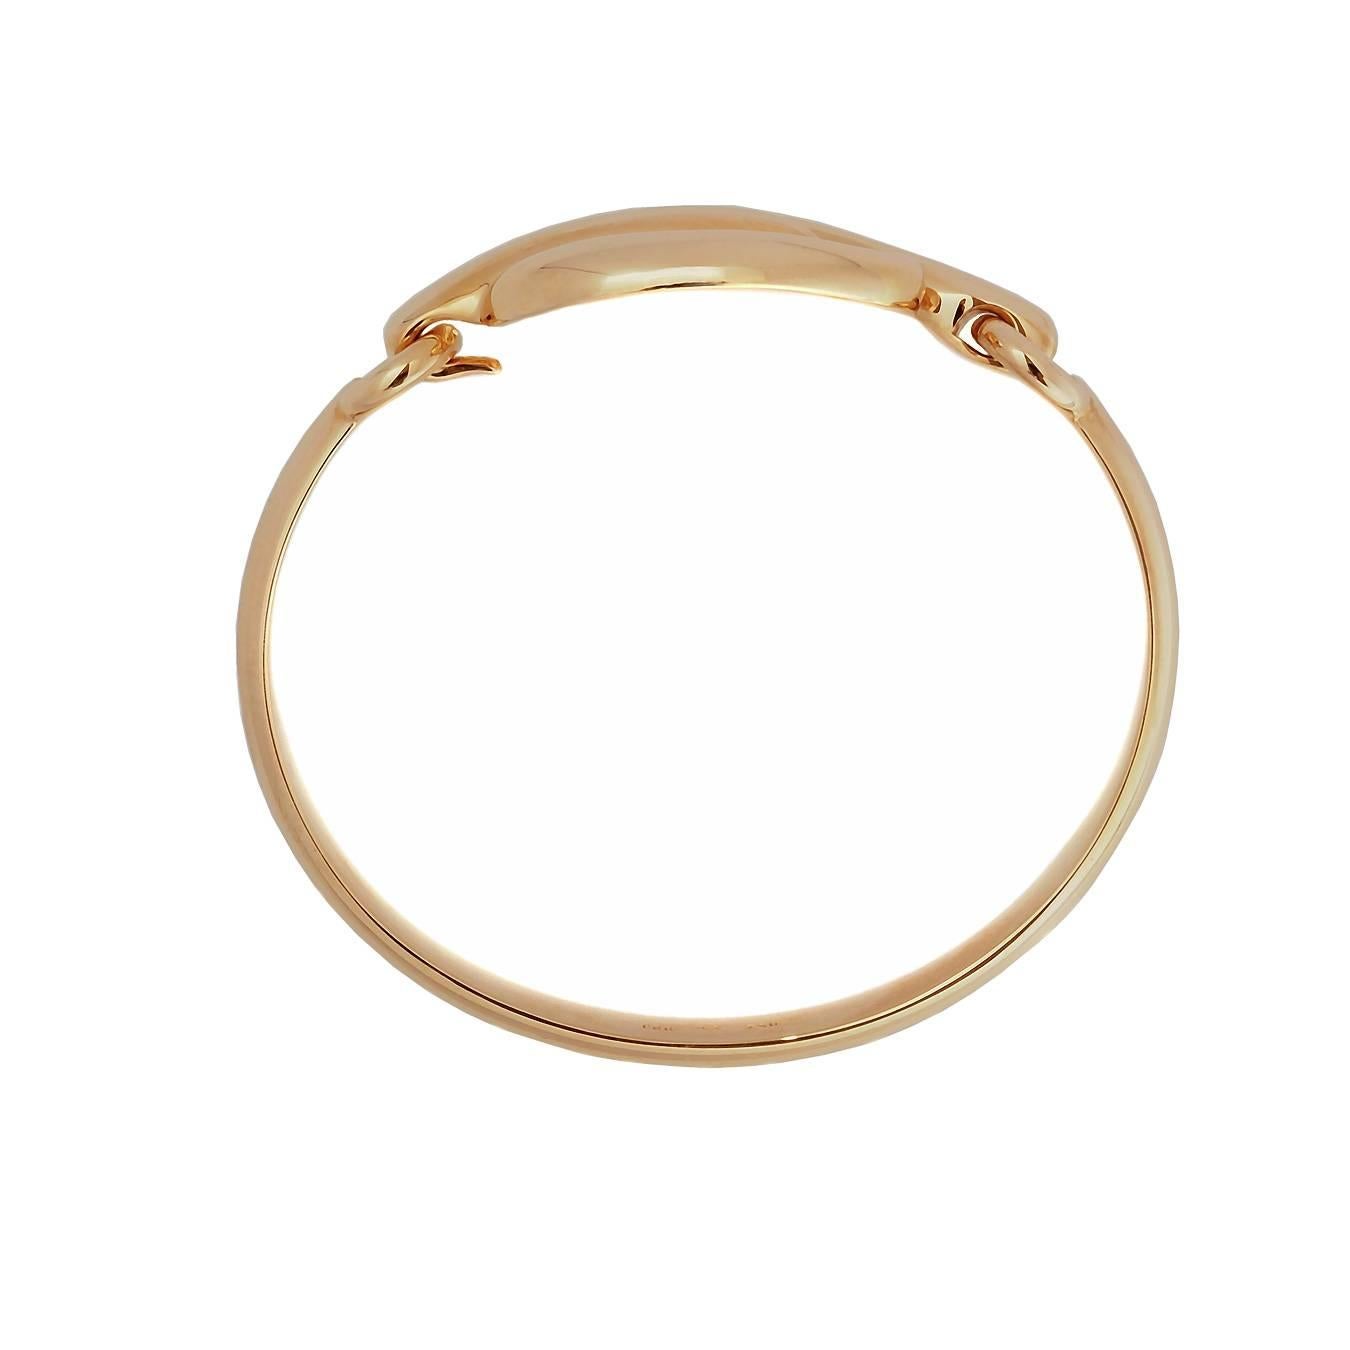 A marvelous brecelet in 18k rosé gold with the Rosenblat-Logo.
It has a diameter of 51 mm x 57.7 mm.
Dimensions of the Rosenblat-logo: 44 mm x 23.6 mm
Designed by Colleen B. Rosenblat